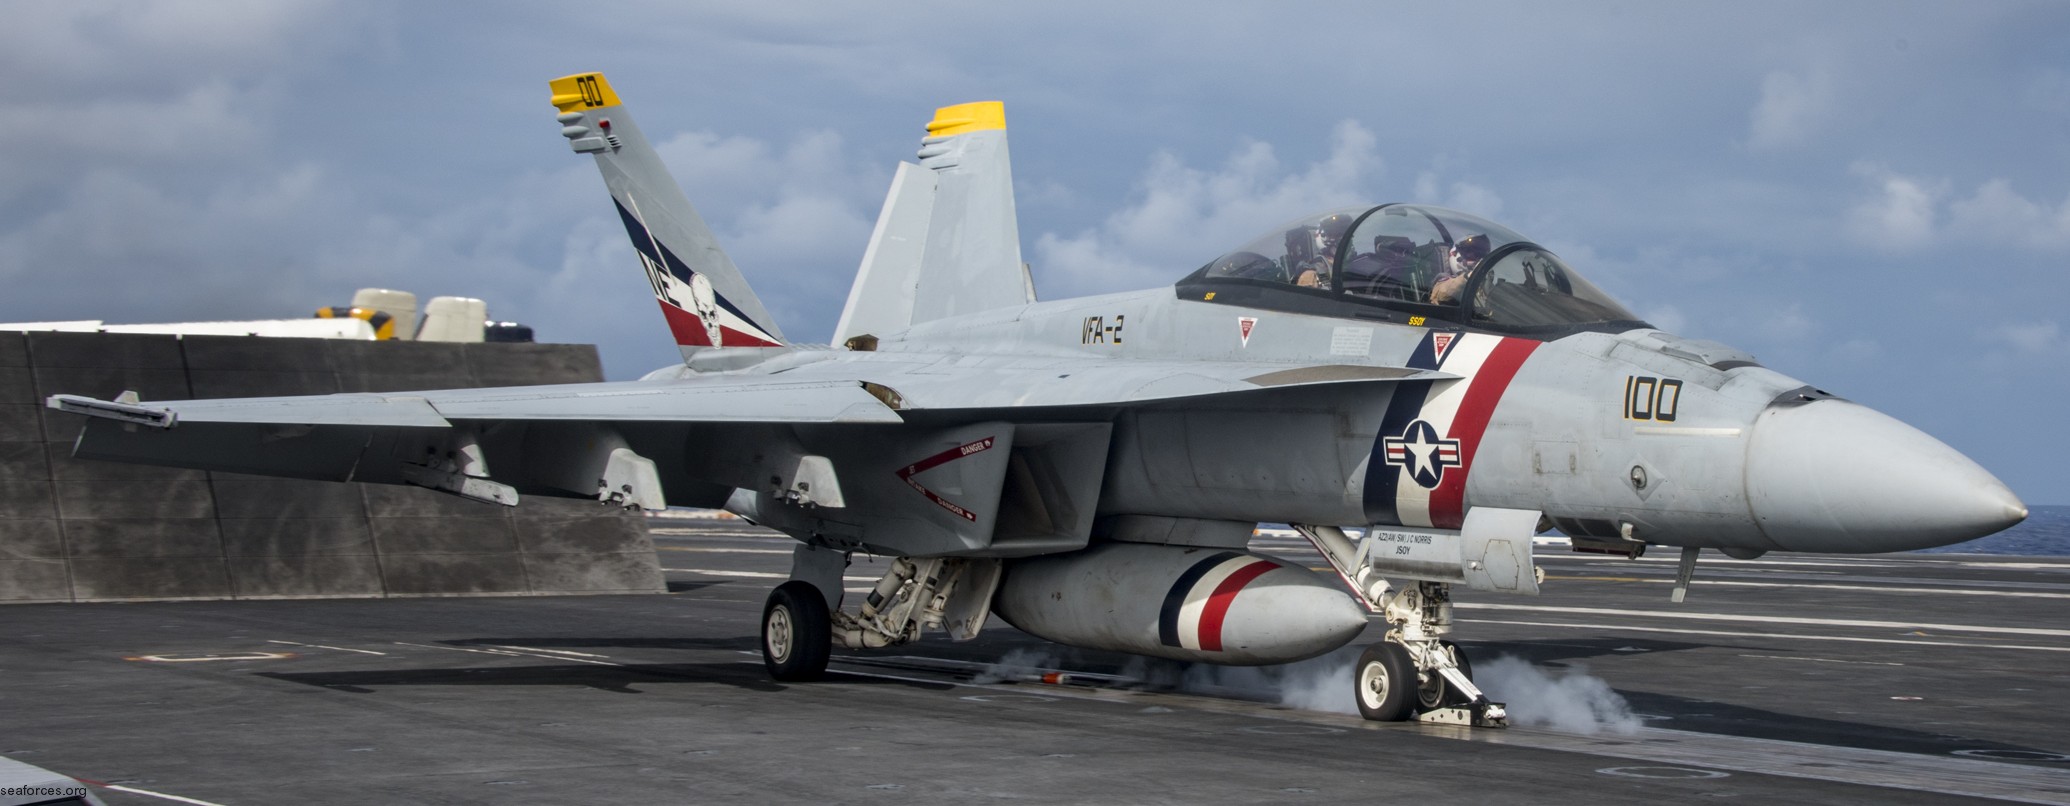 vfa-2 bounty hunters strike fighter squadron us navy f/a-18f super hornet carrier air wing cvw-2 uss carl vinson cvn-70 20